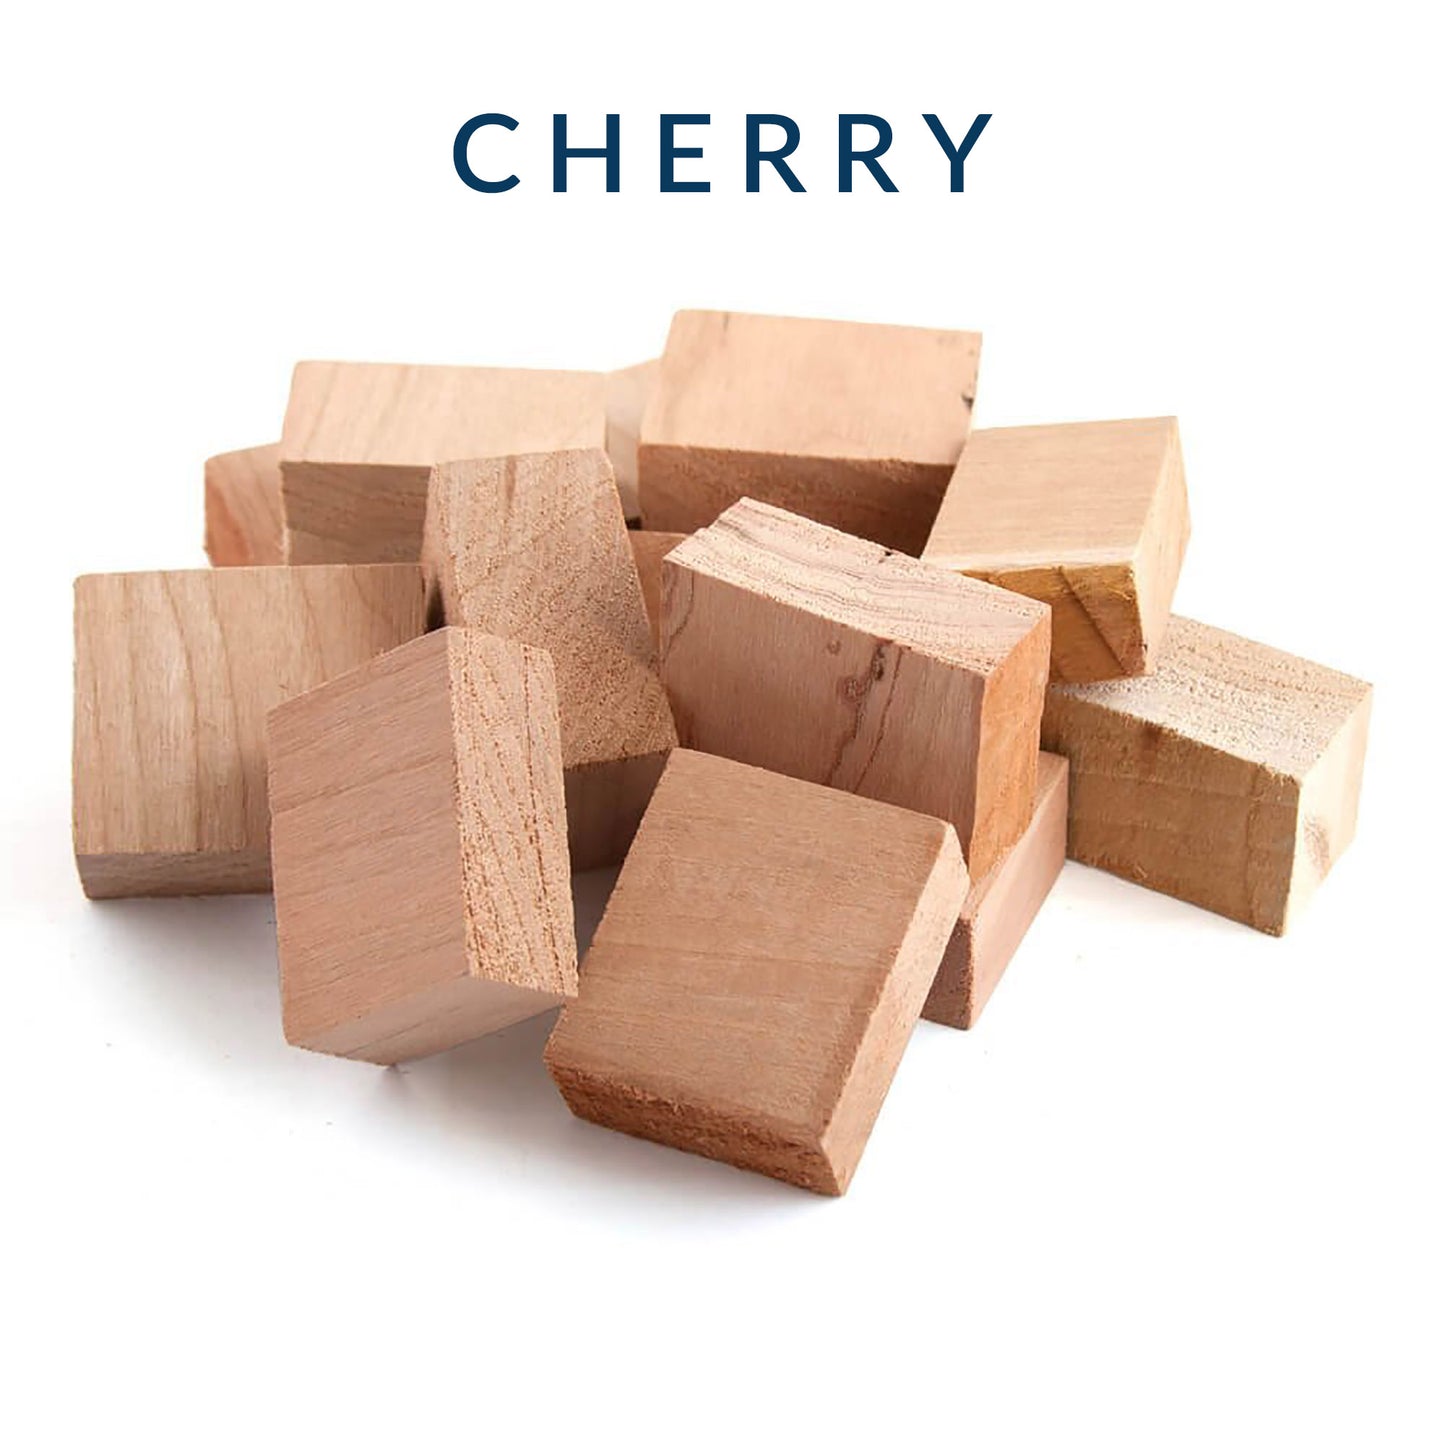 Kiln-dried Cherry Wood Chunks for Smoking